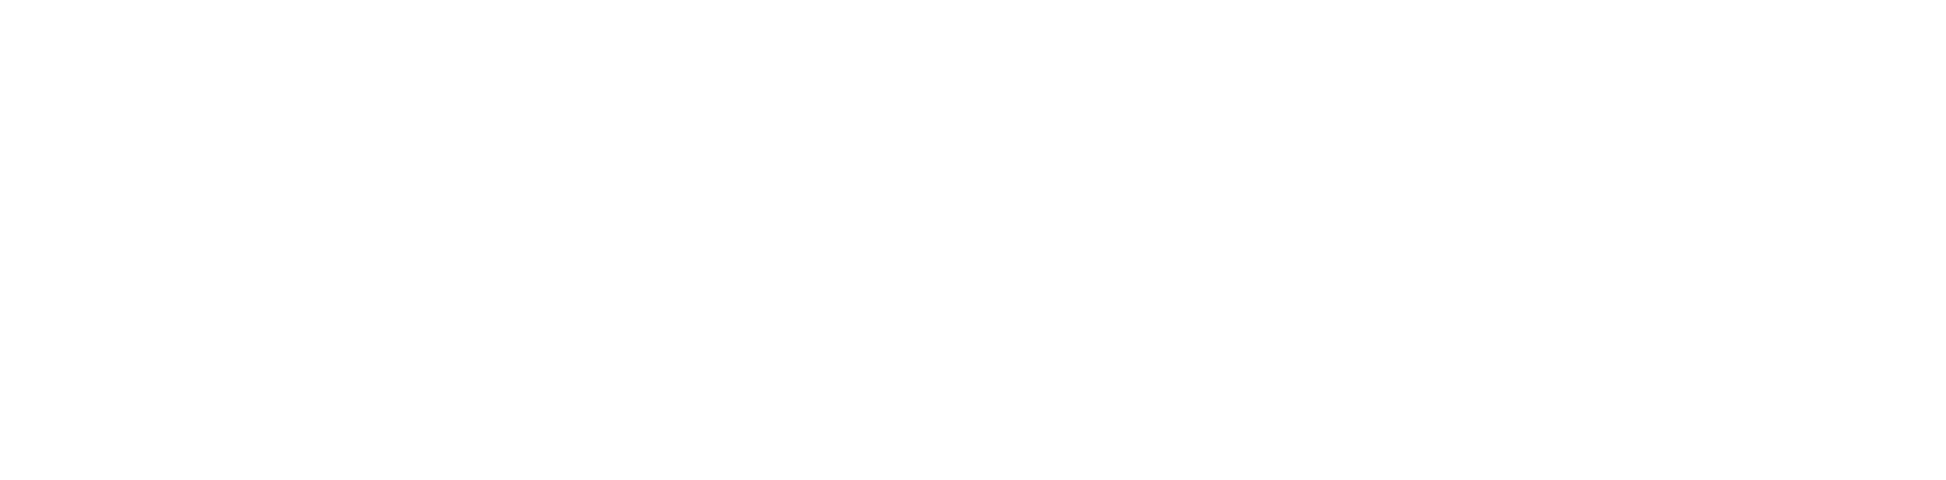 nito hockey logo white